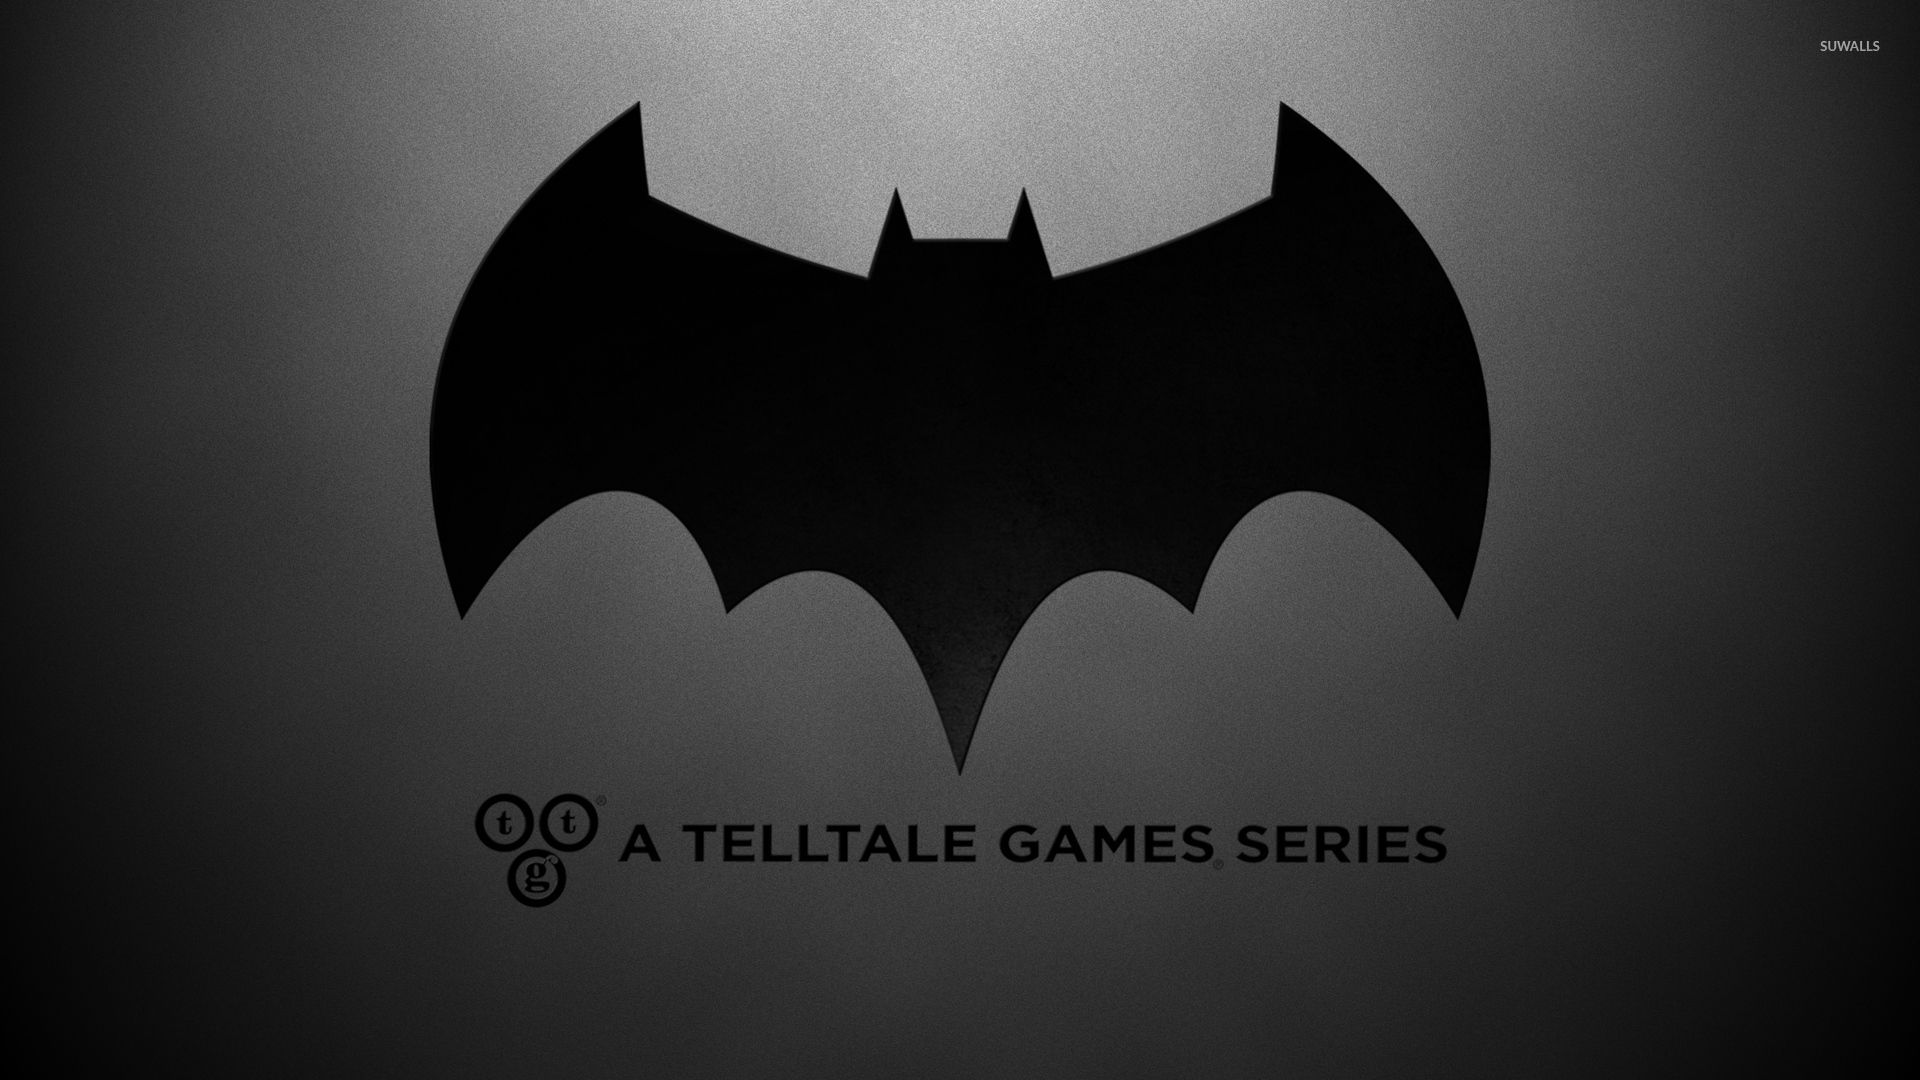 A Telltale Games Series wallpaper .com